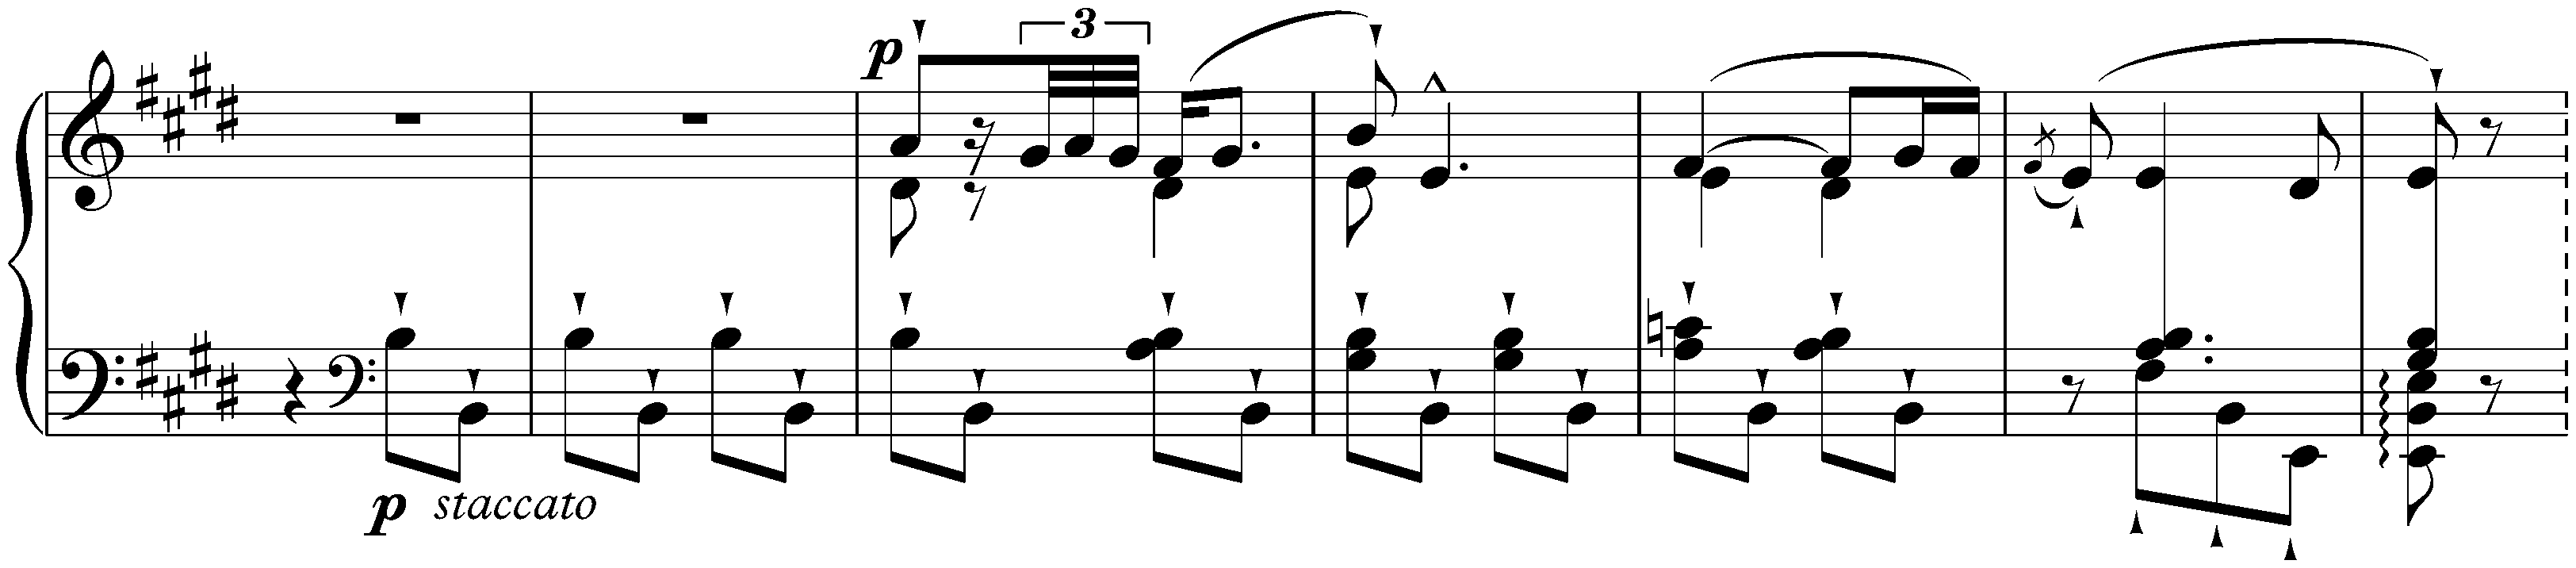 Fünf ungarische Volkslieder, S. 245; 4. C-sharp minor